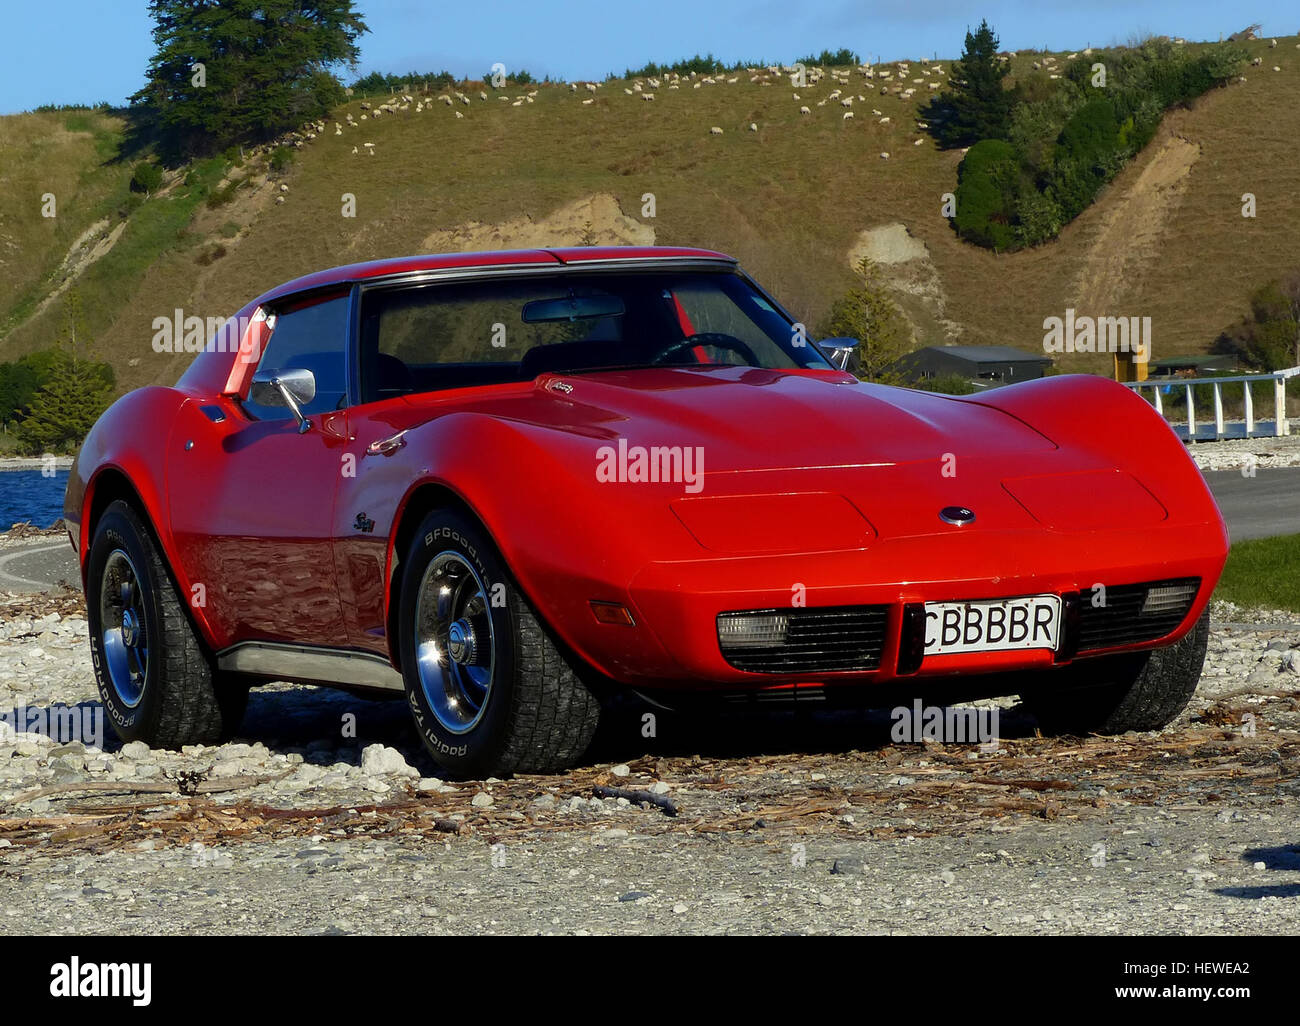 Classic Cars,Corvette,Panasonic DMC-FZ200,Red Sports car Stock Photo